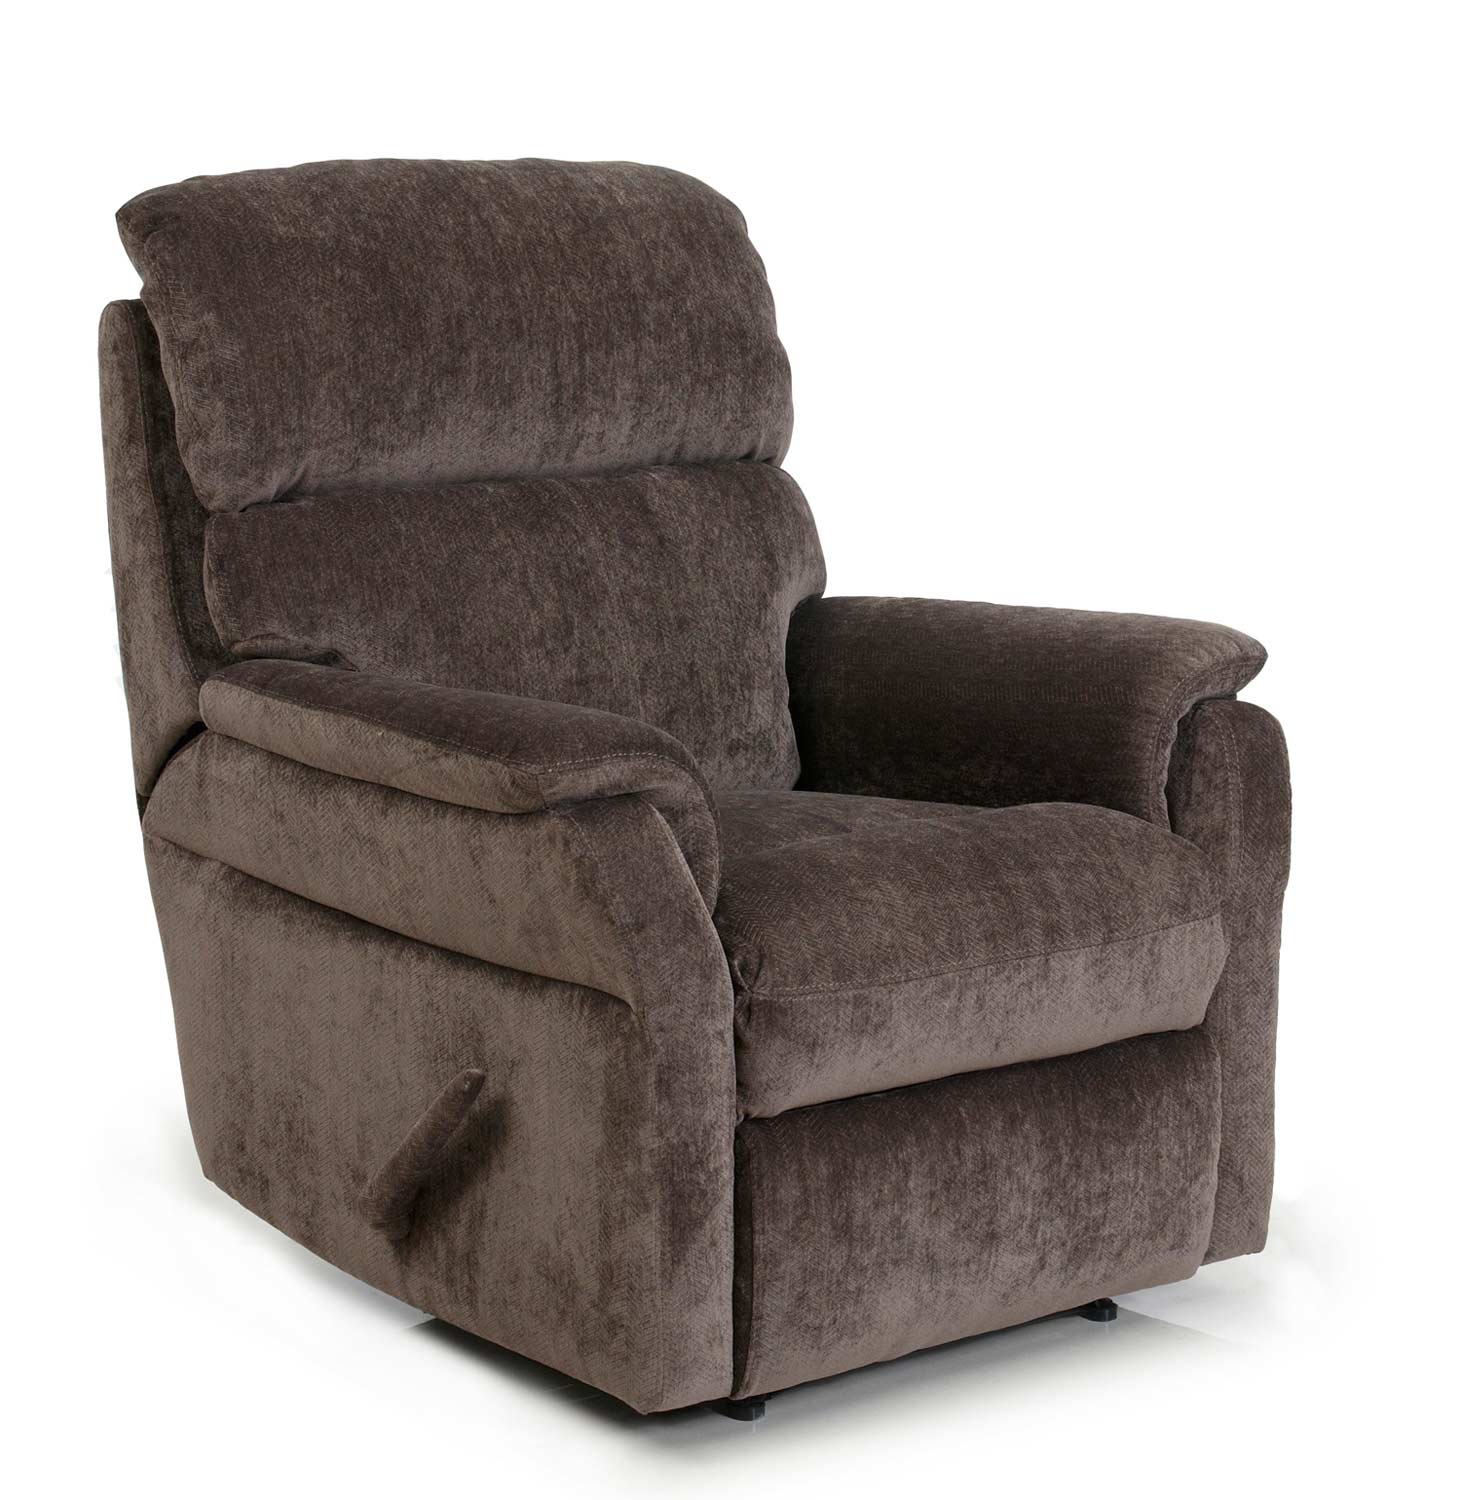 Barcalounger Cross II Layflat Casual Comforts Recliner Chair - Truffle